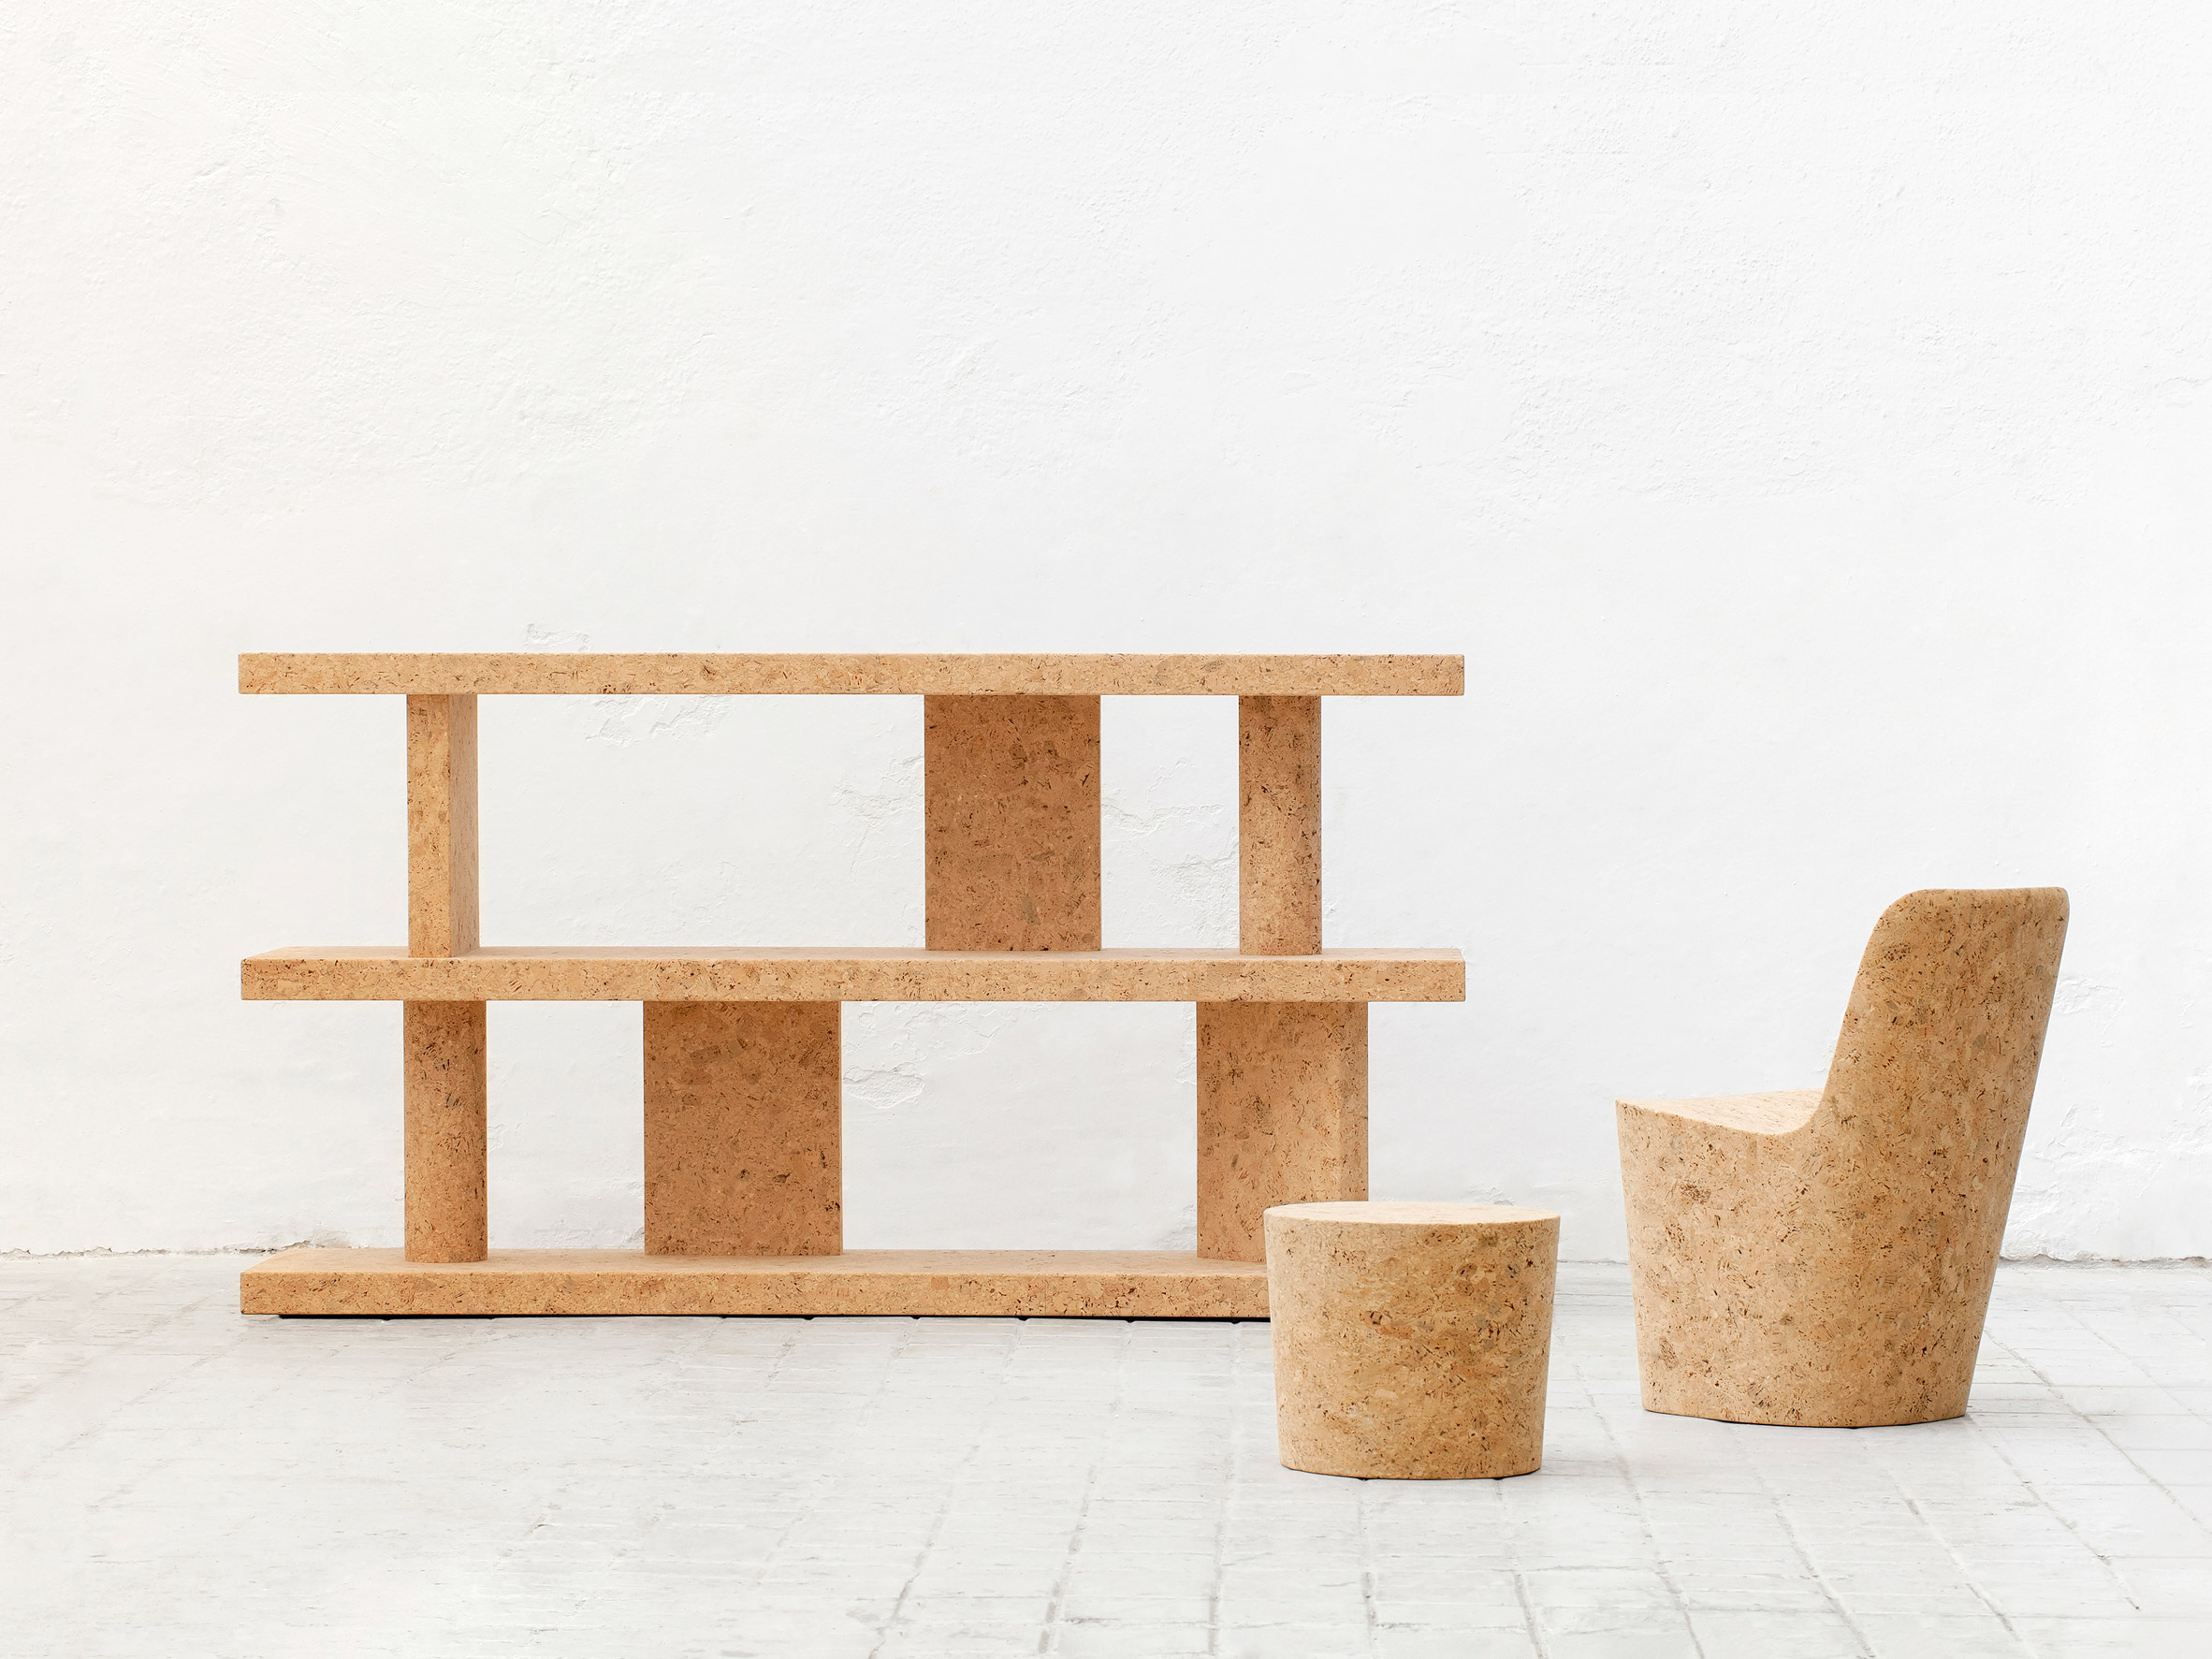 Minimalist Furniture Collection "Corks" by Jasper Morrison